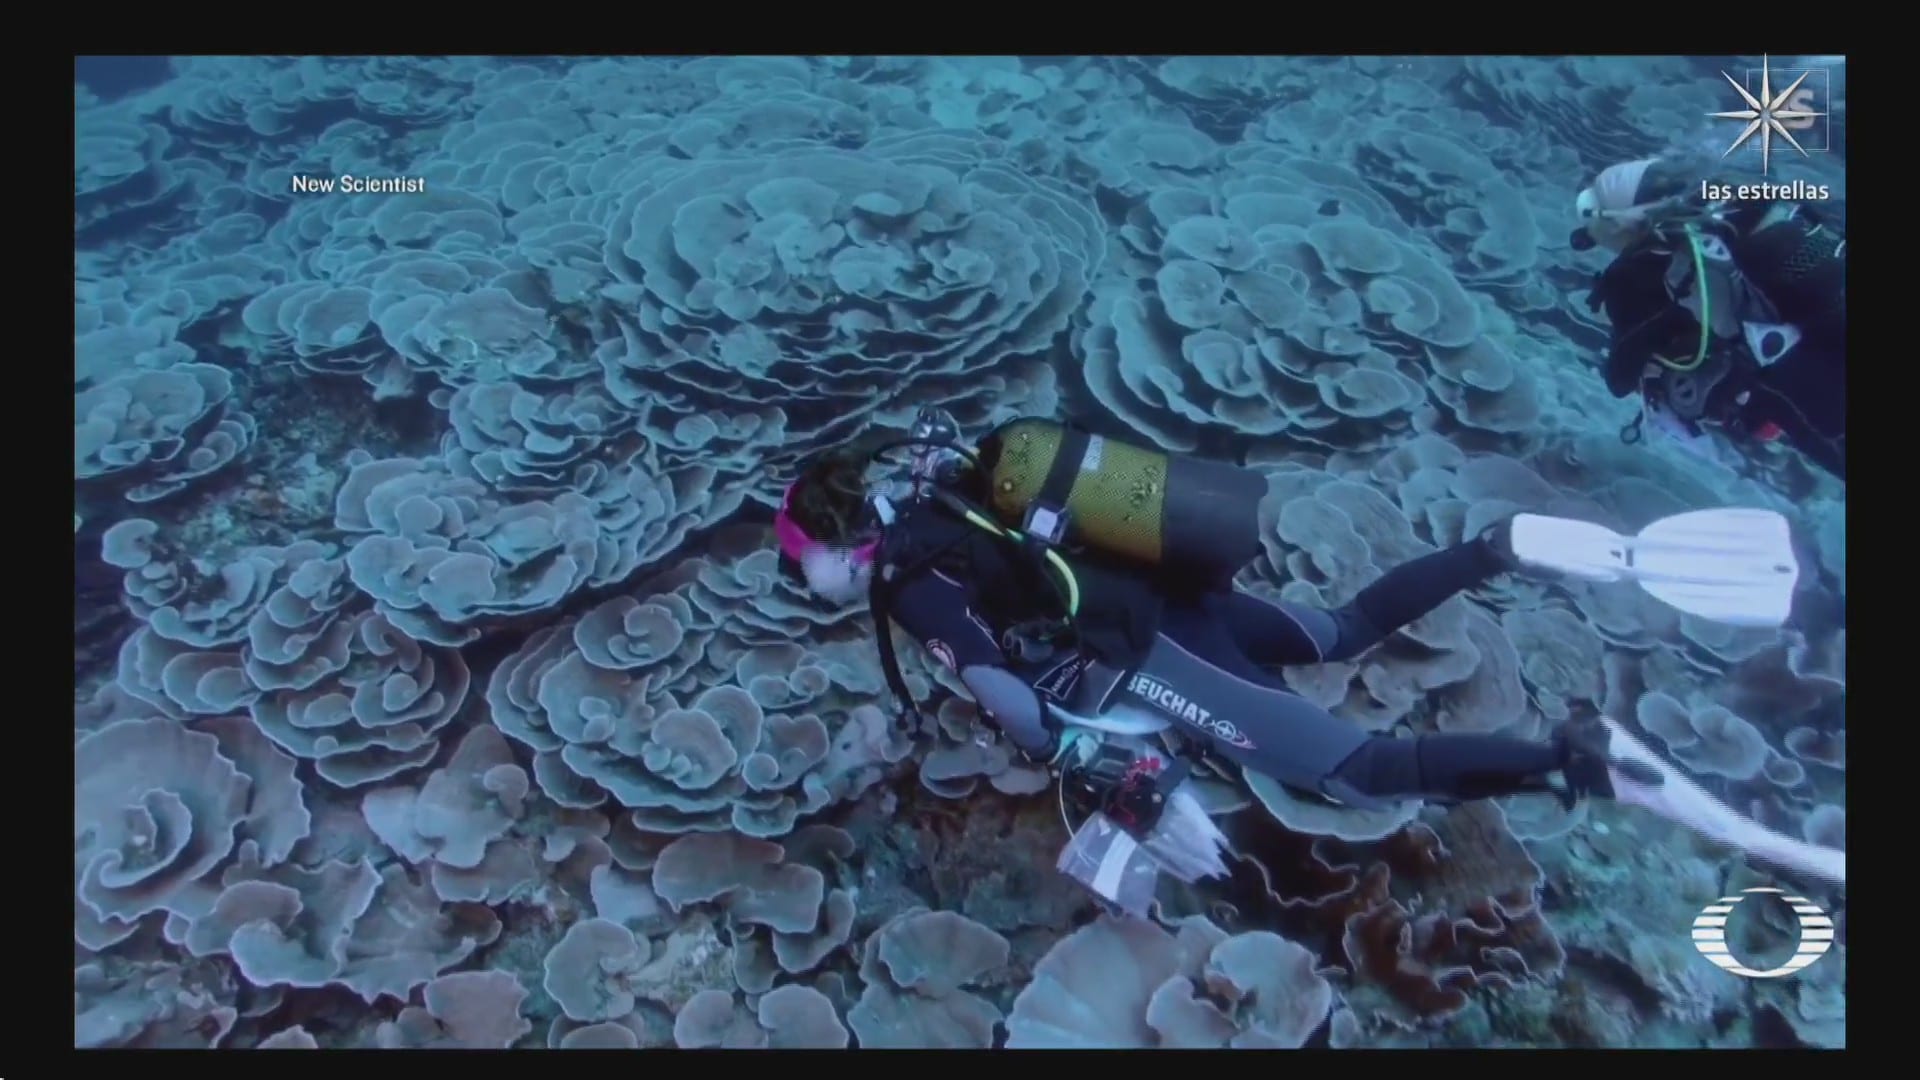 descubren arrecife de coral frente a costas de tahiti